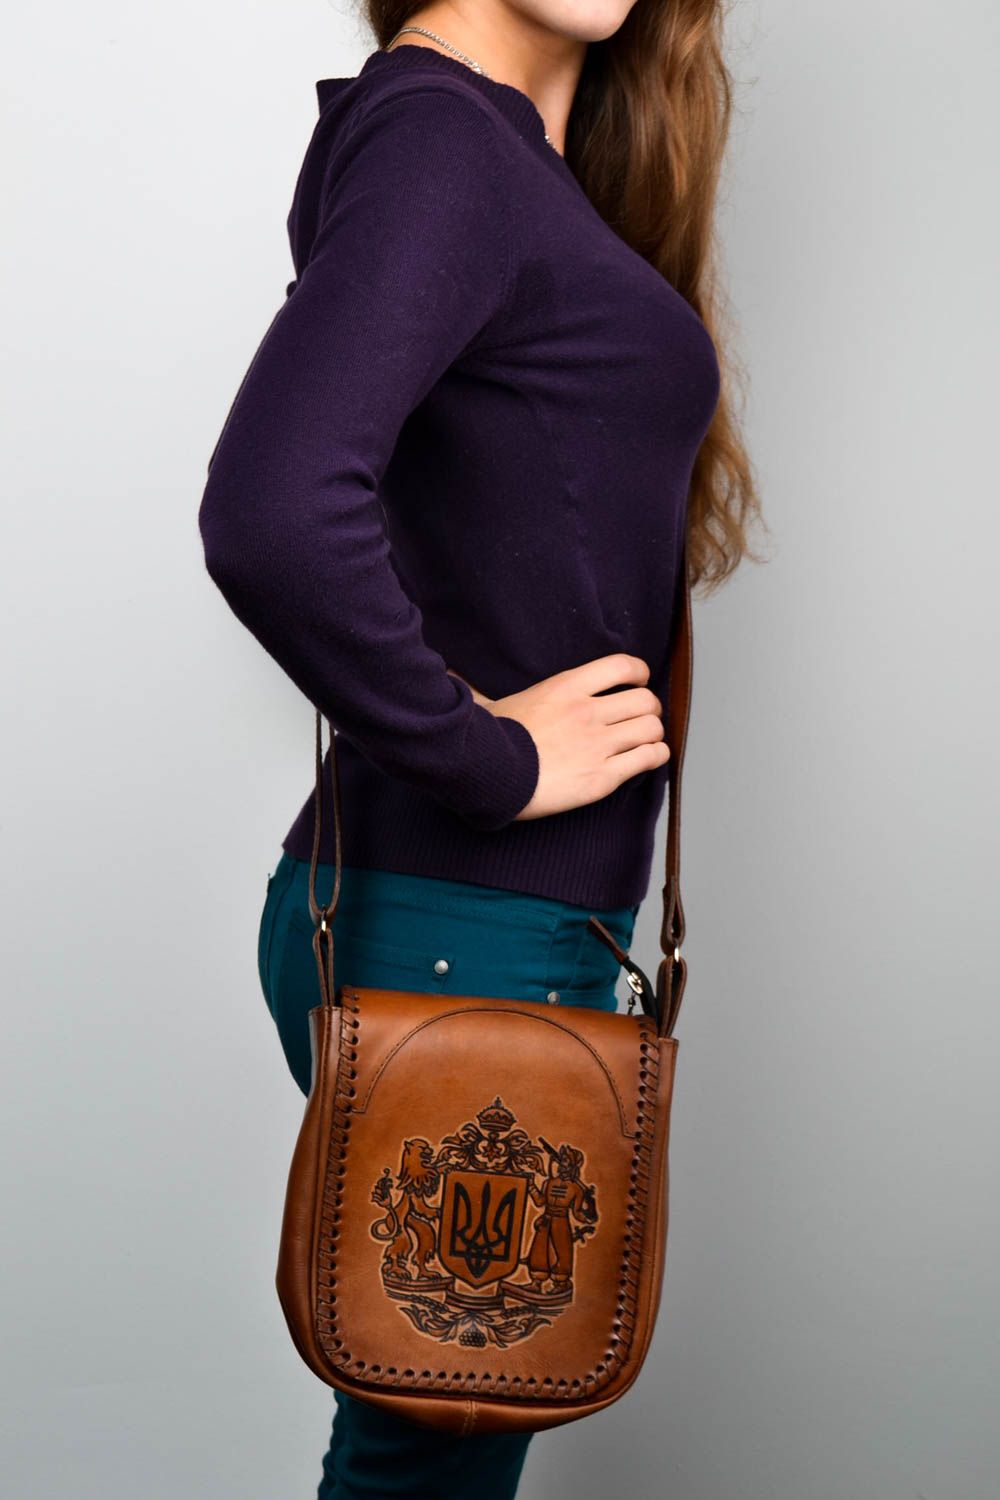 Leather purse stylish accessories fashion shoulder bag elegant purse for girls photo 1